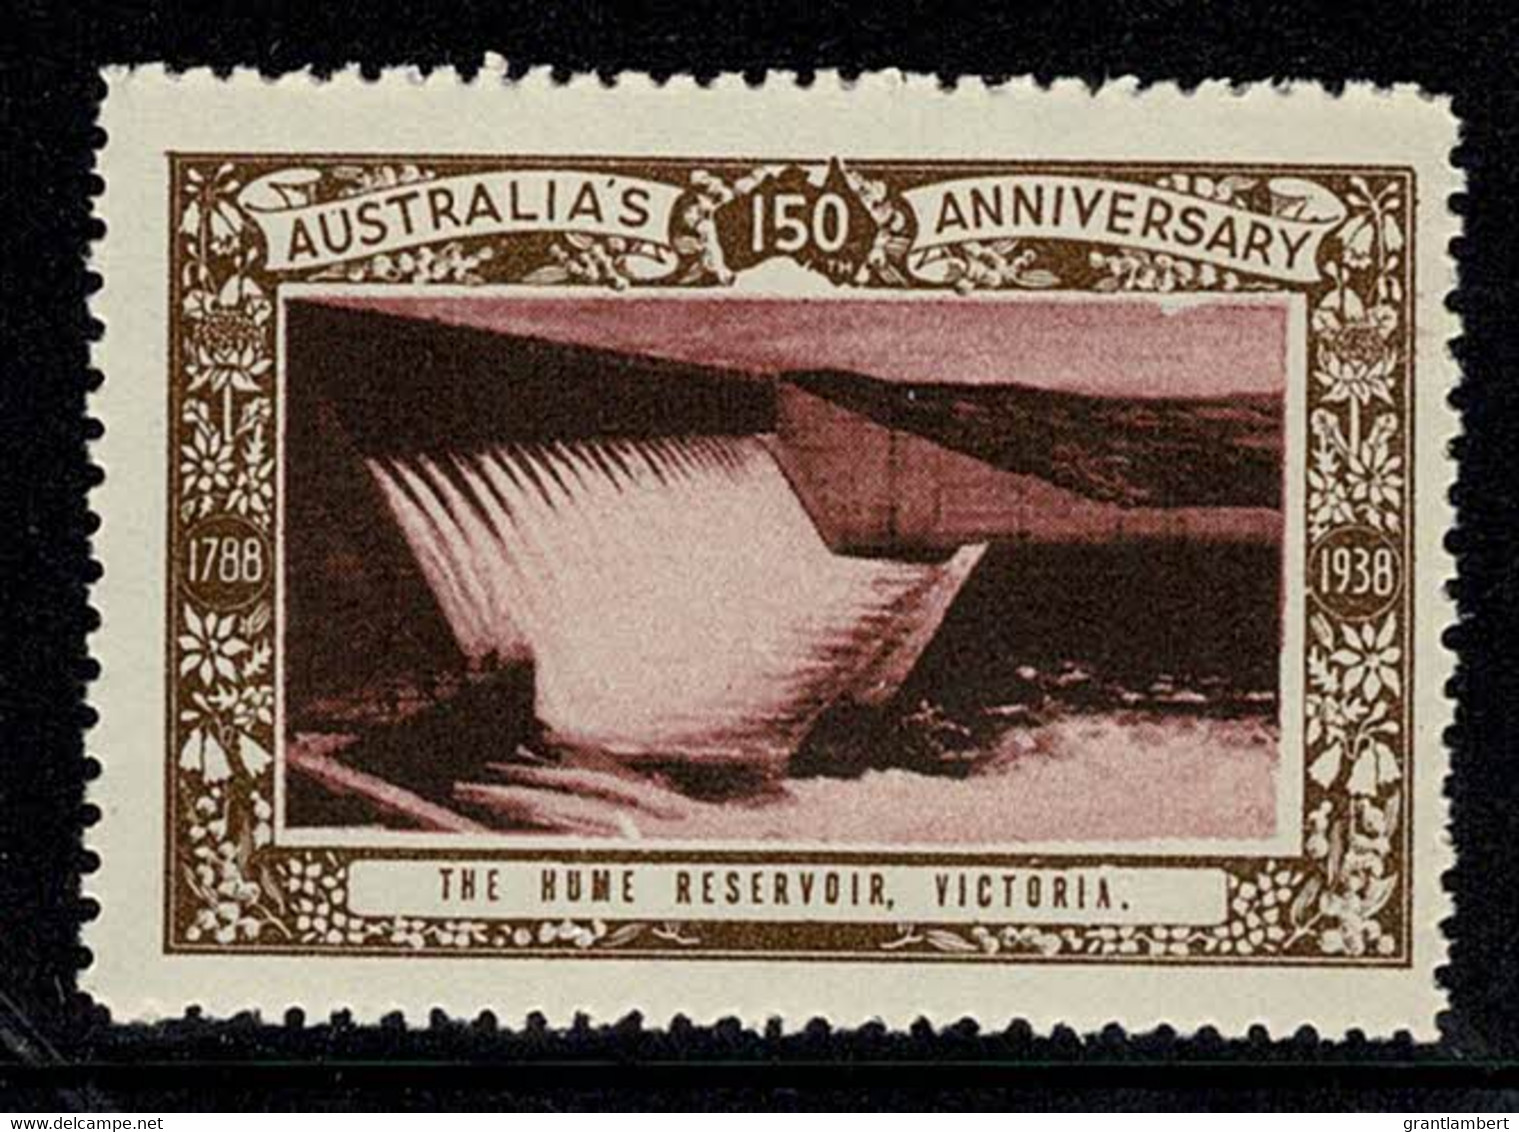 Australia 1938 The Hume Reservoir, Victoria - NSW 150th Anniversary Cinderella MNH - Cinderella